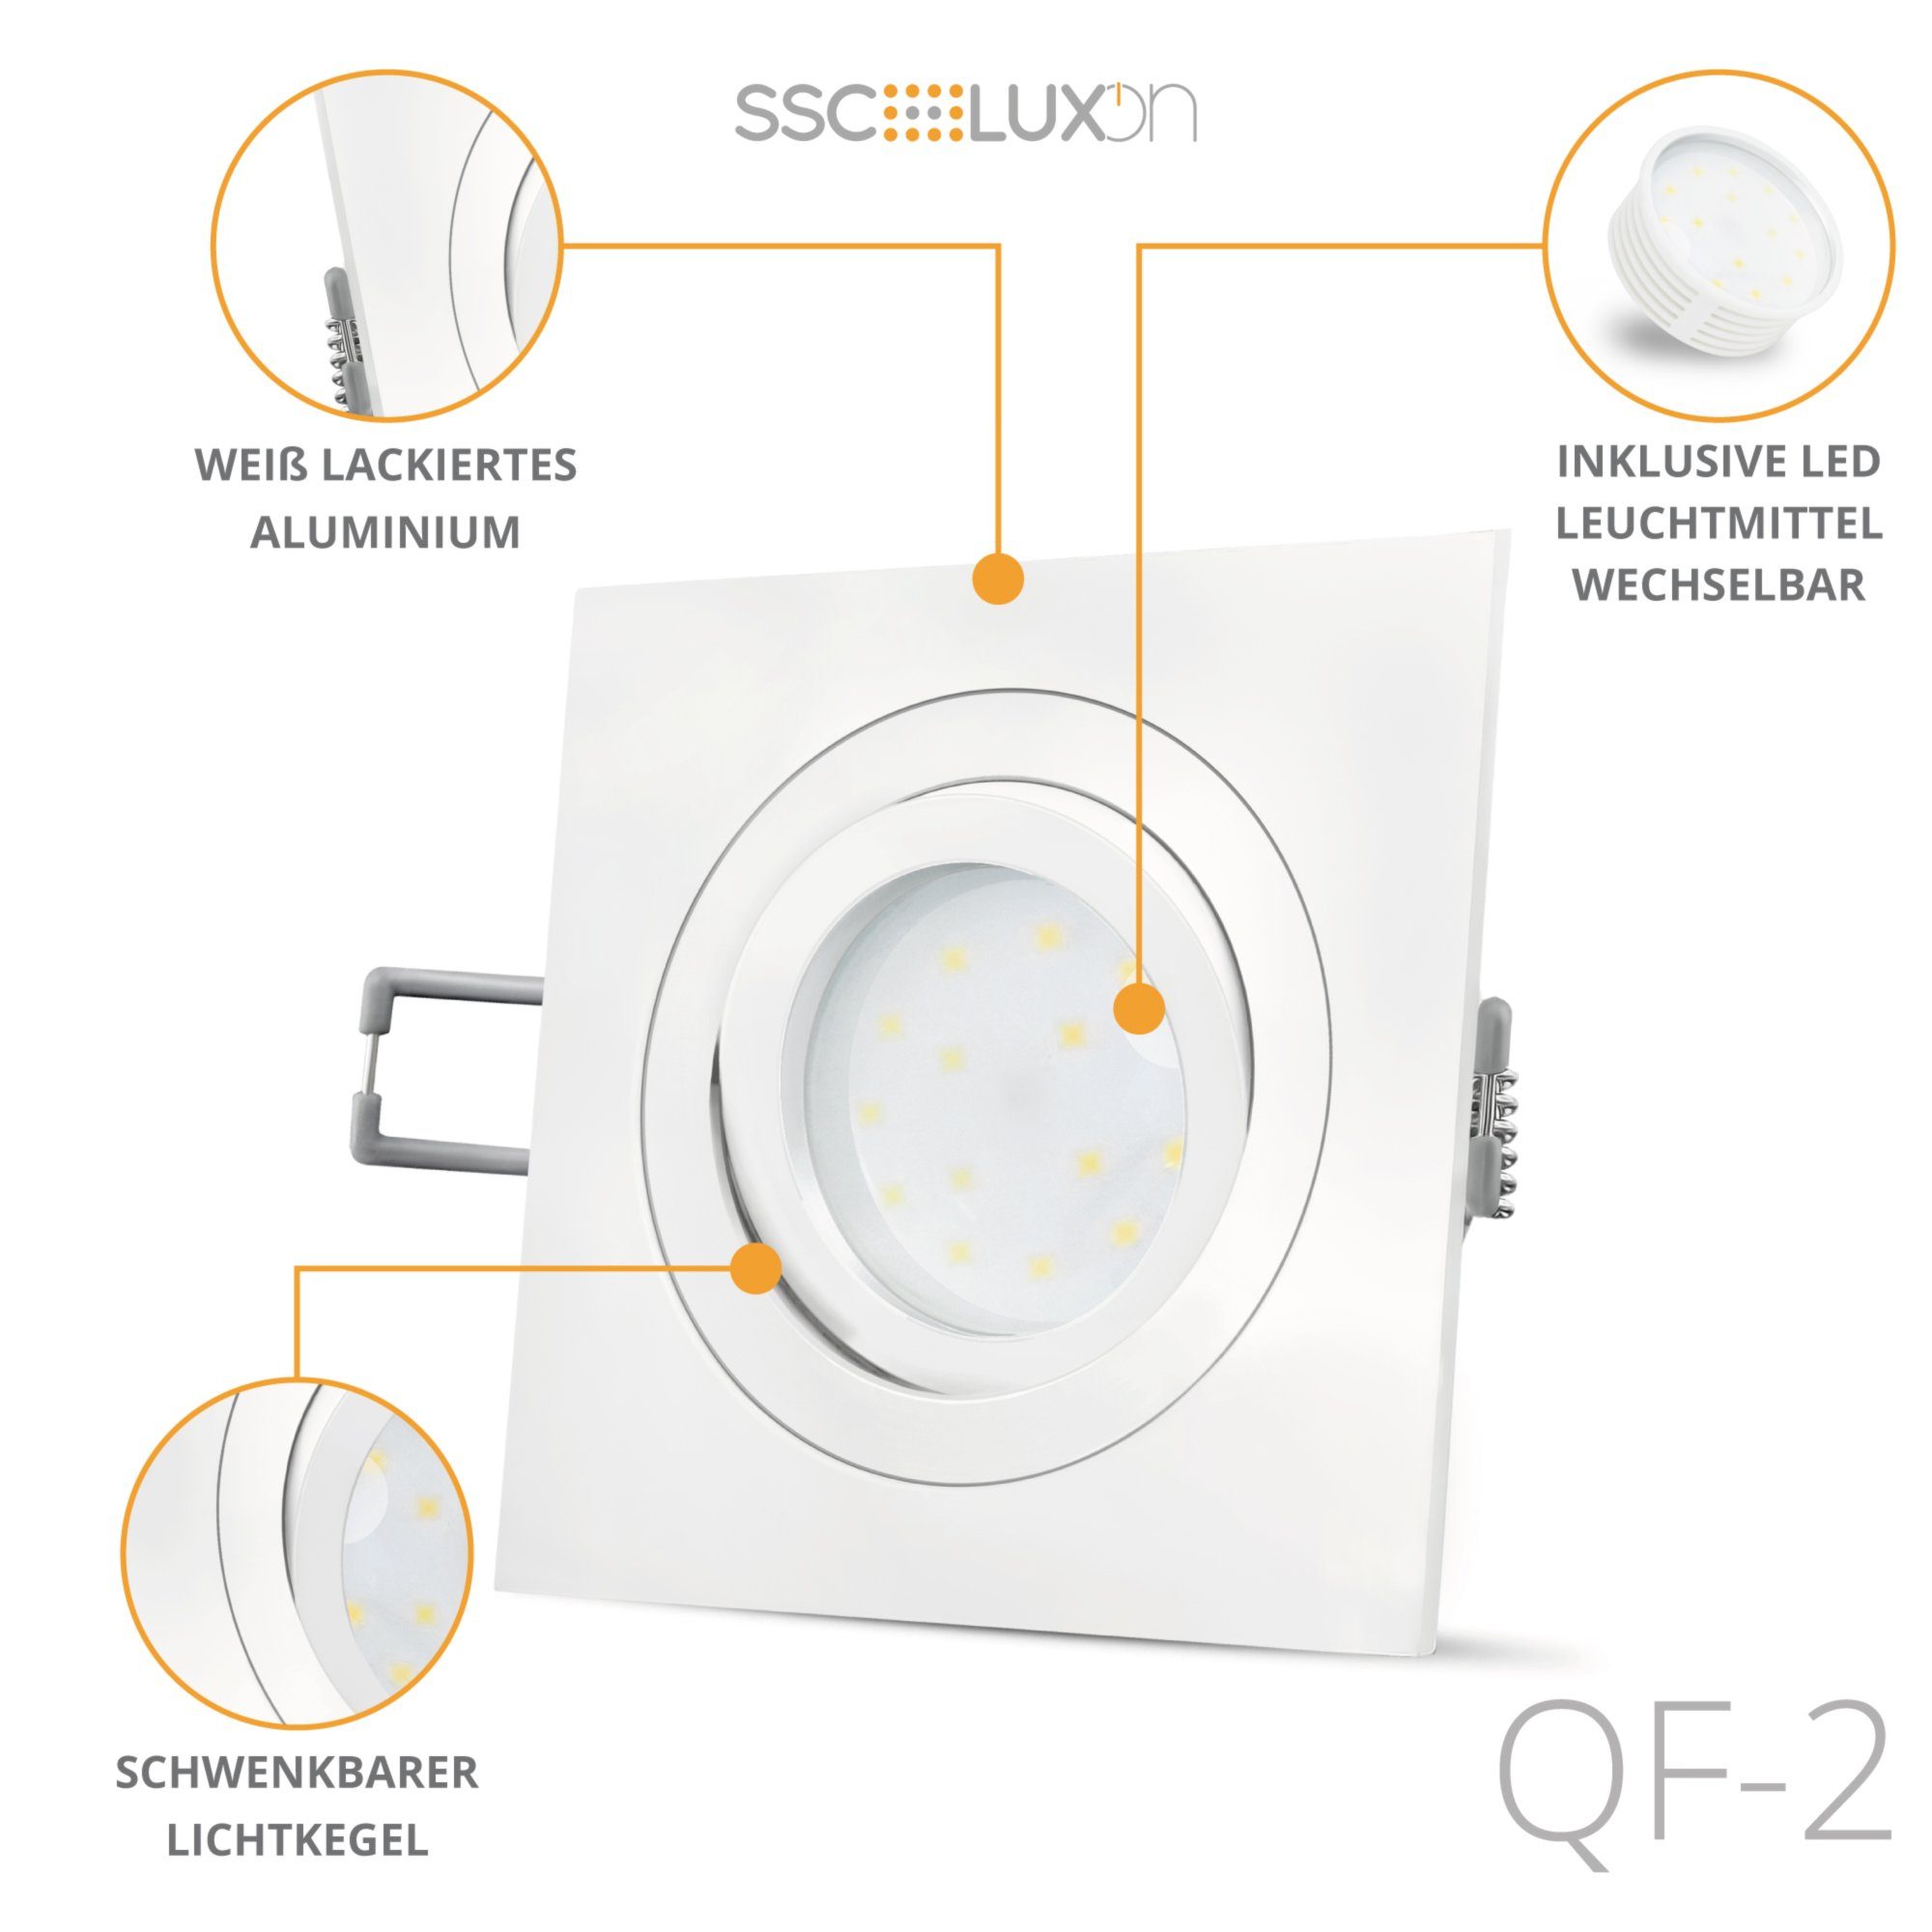 & LED Einbaustrahler SSC-LUXon weiss, flach Neutralweiß Einbauspot Modul QF-2 5W, mit LED LED schwenkbar